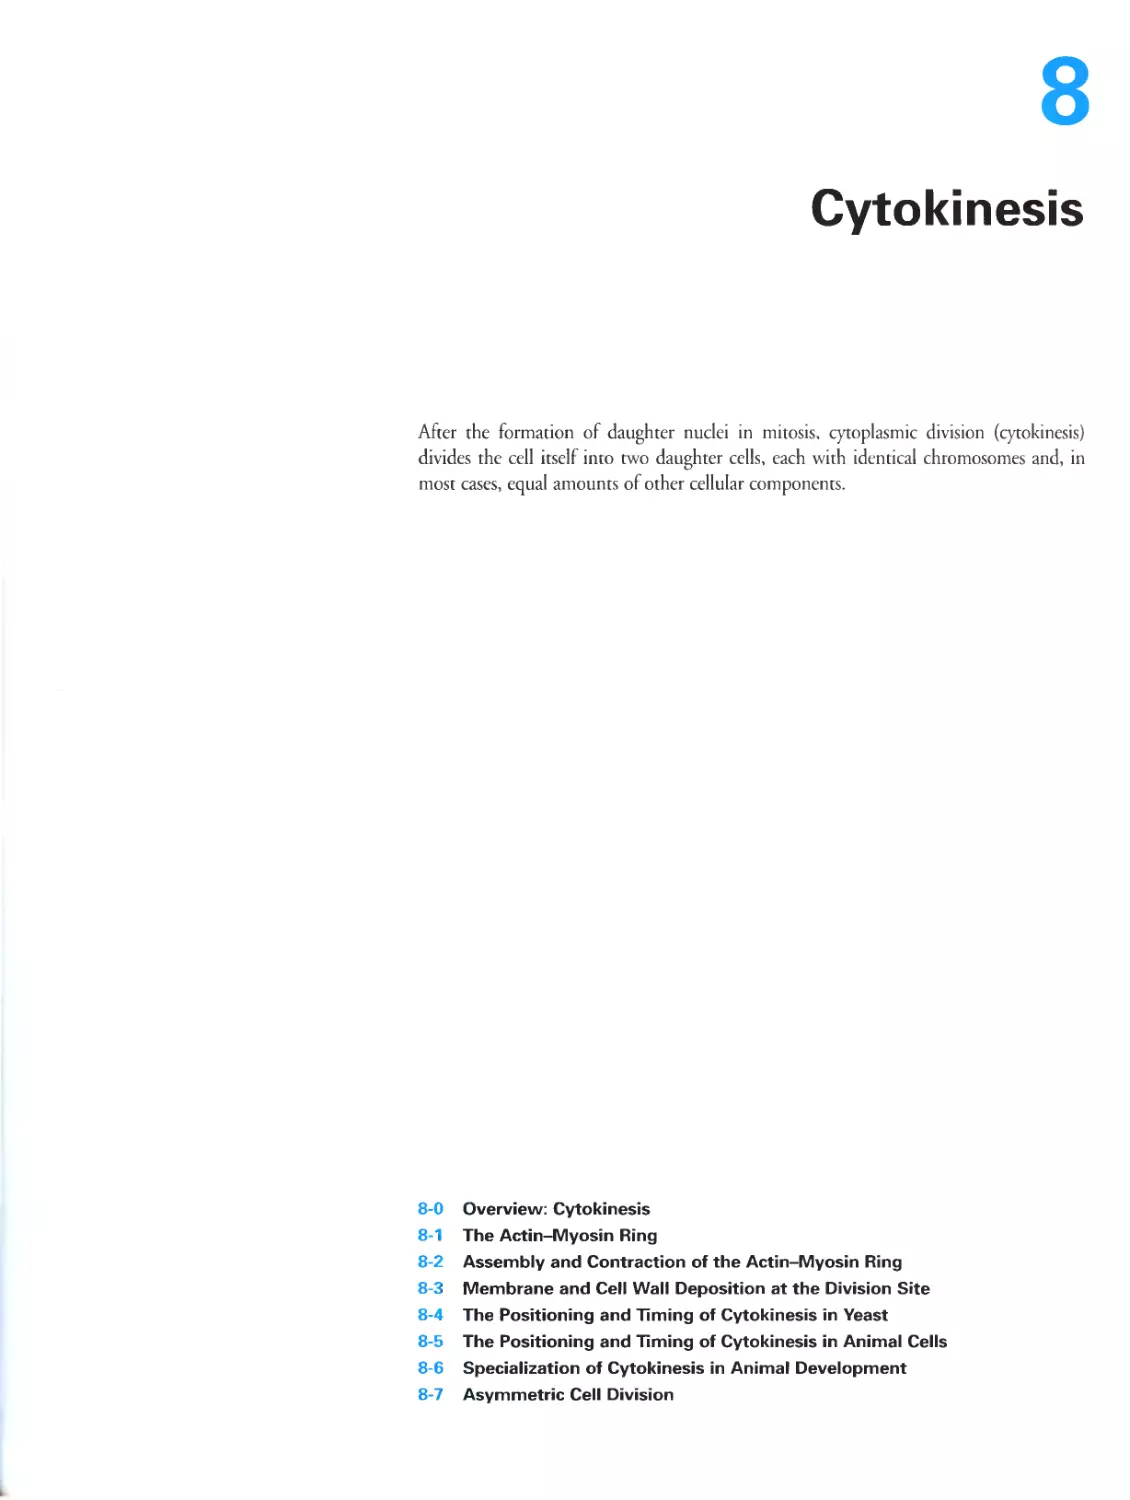 Chapter 8. Cytokinesis